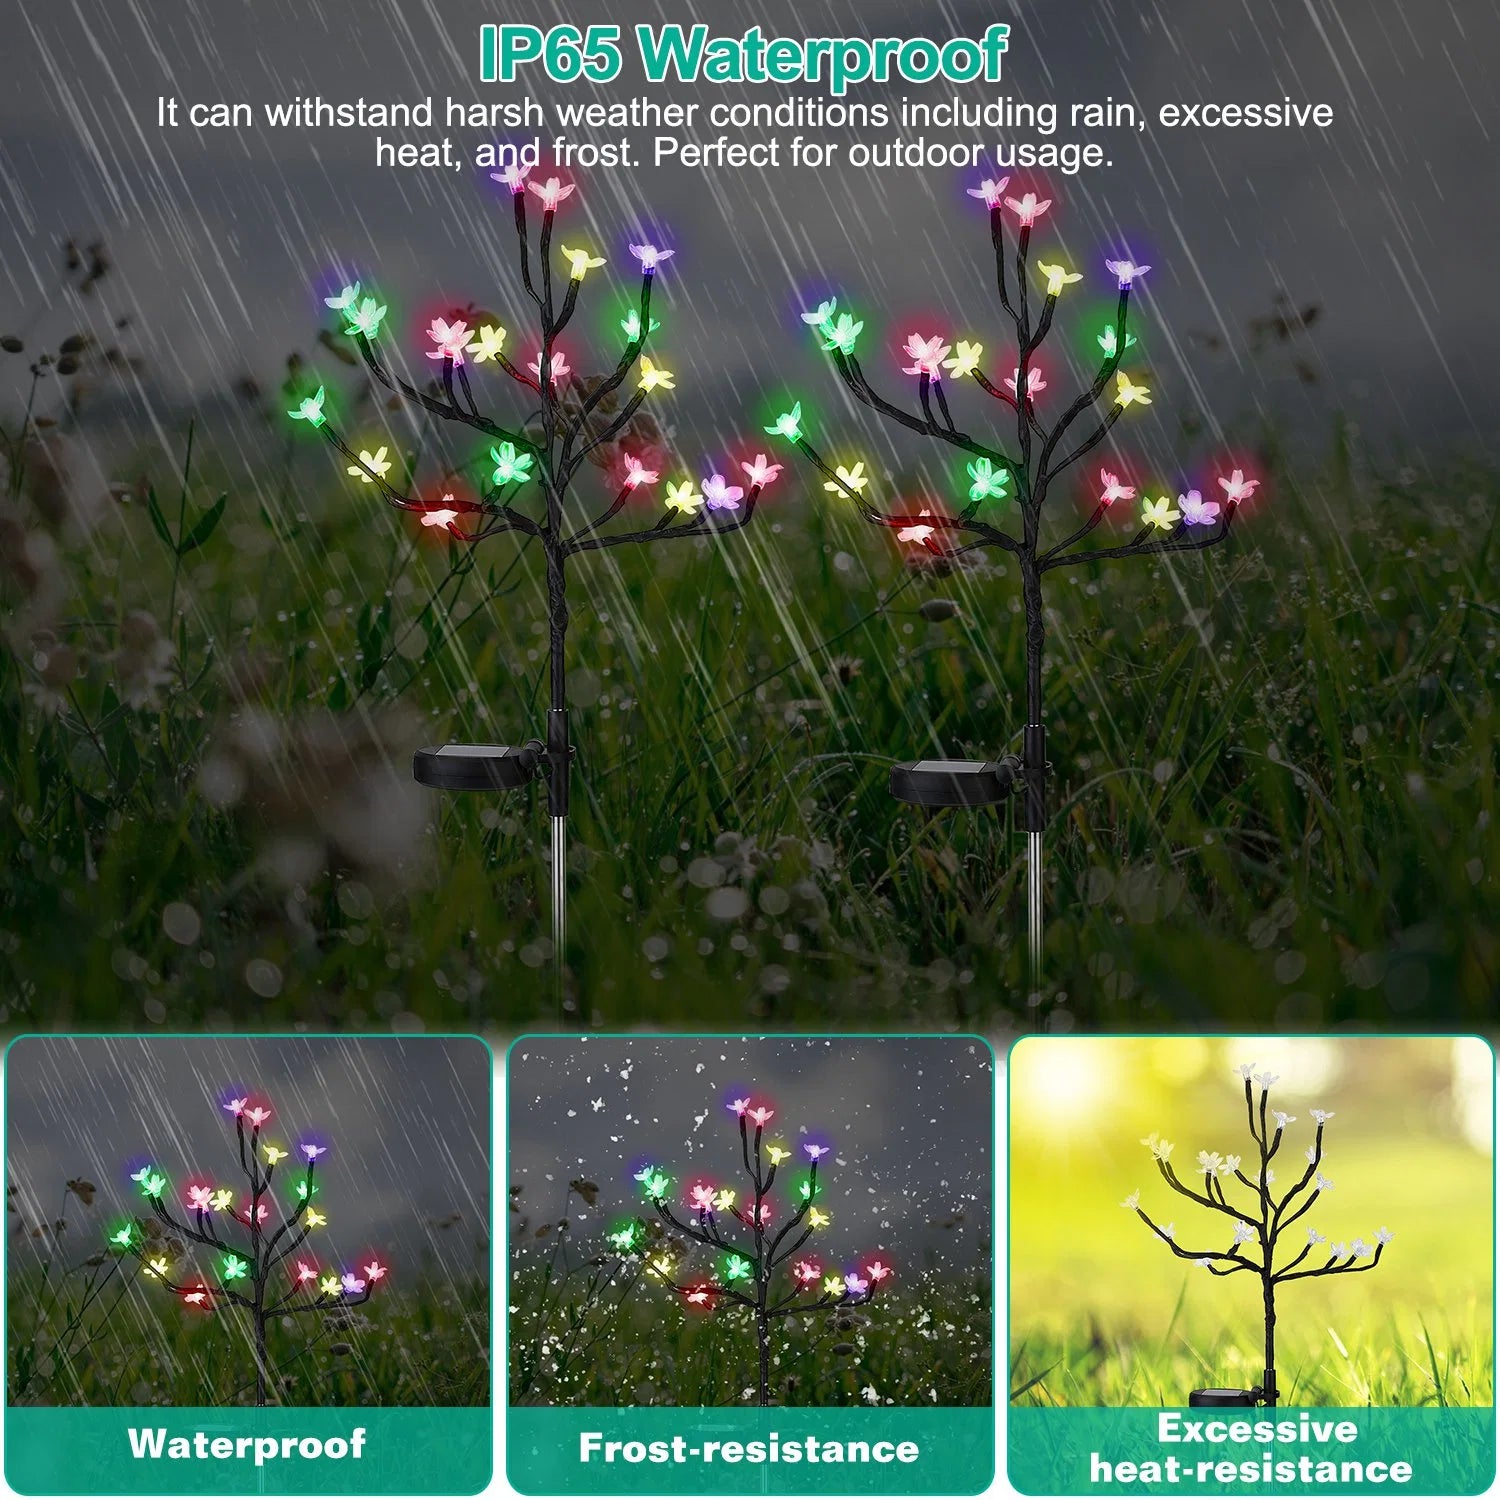 LazyDecorlight™ 2Pcs Outdoor Solar Light Cherry Blossom Flower Landscape Light Yard Stake Decor Lamp - Lazy Pro